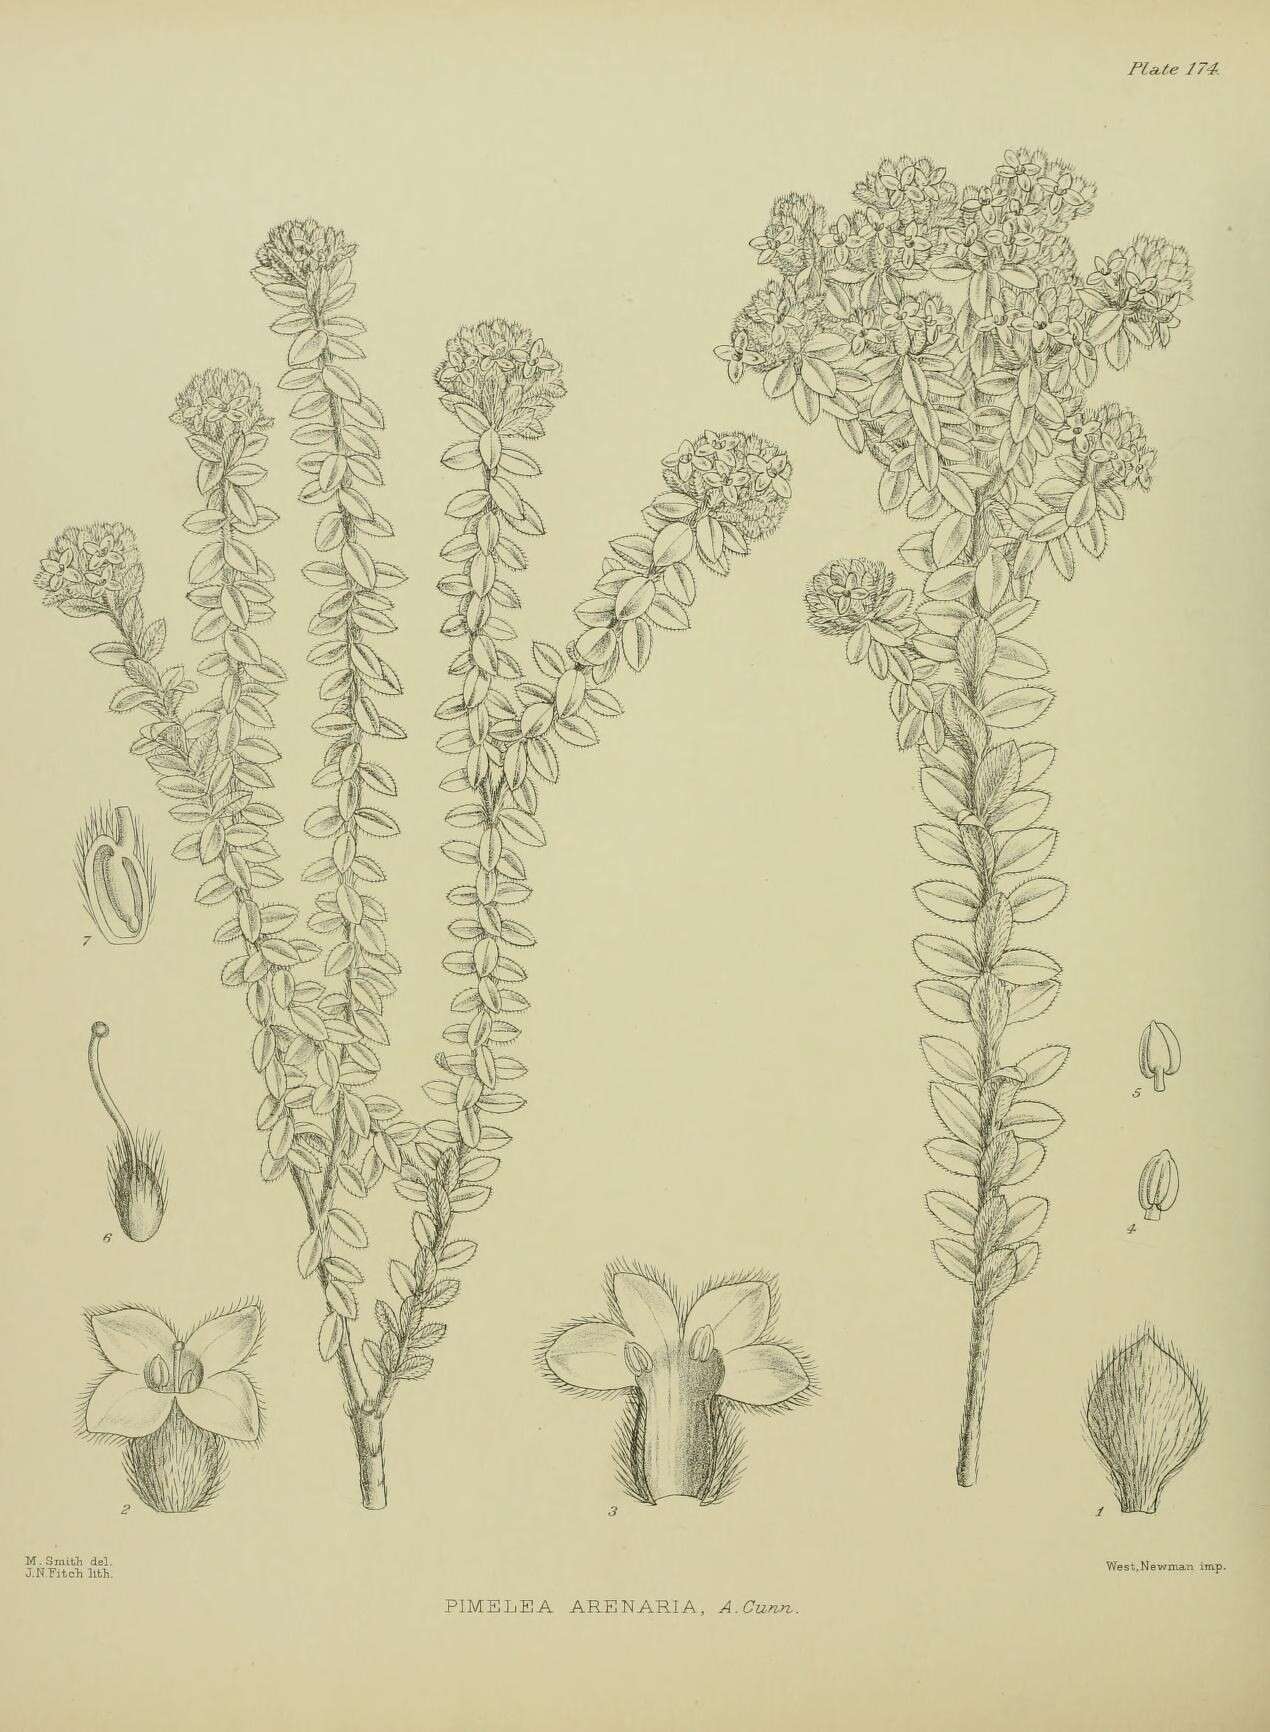 Image of Pimelea villosa subsp. arenaria (A. Cunn.) C. J. Burrows